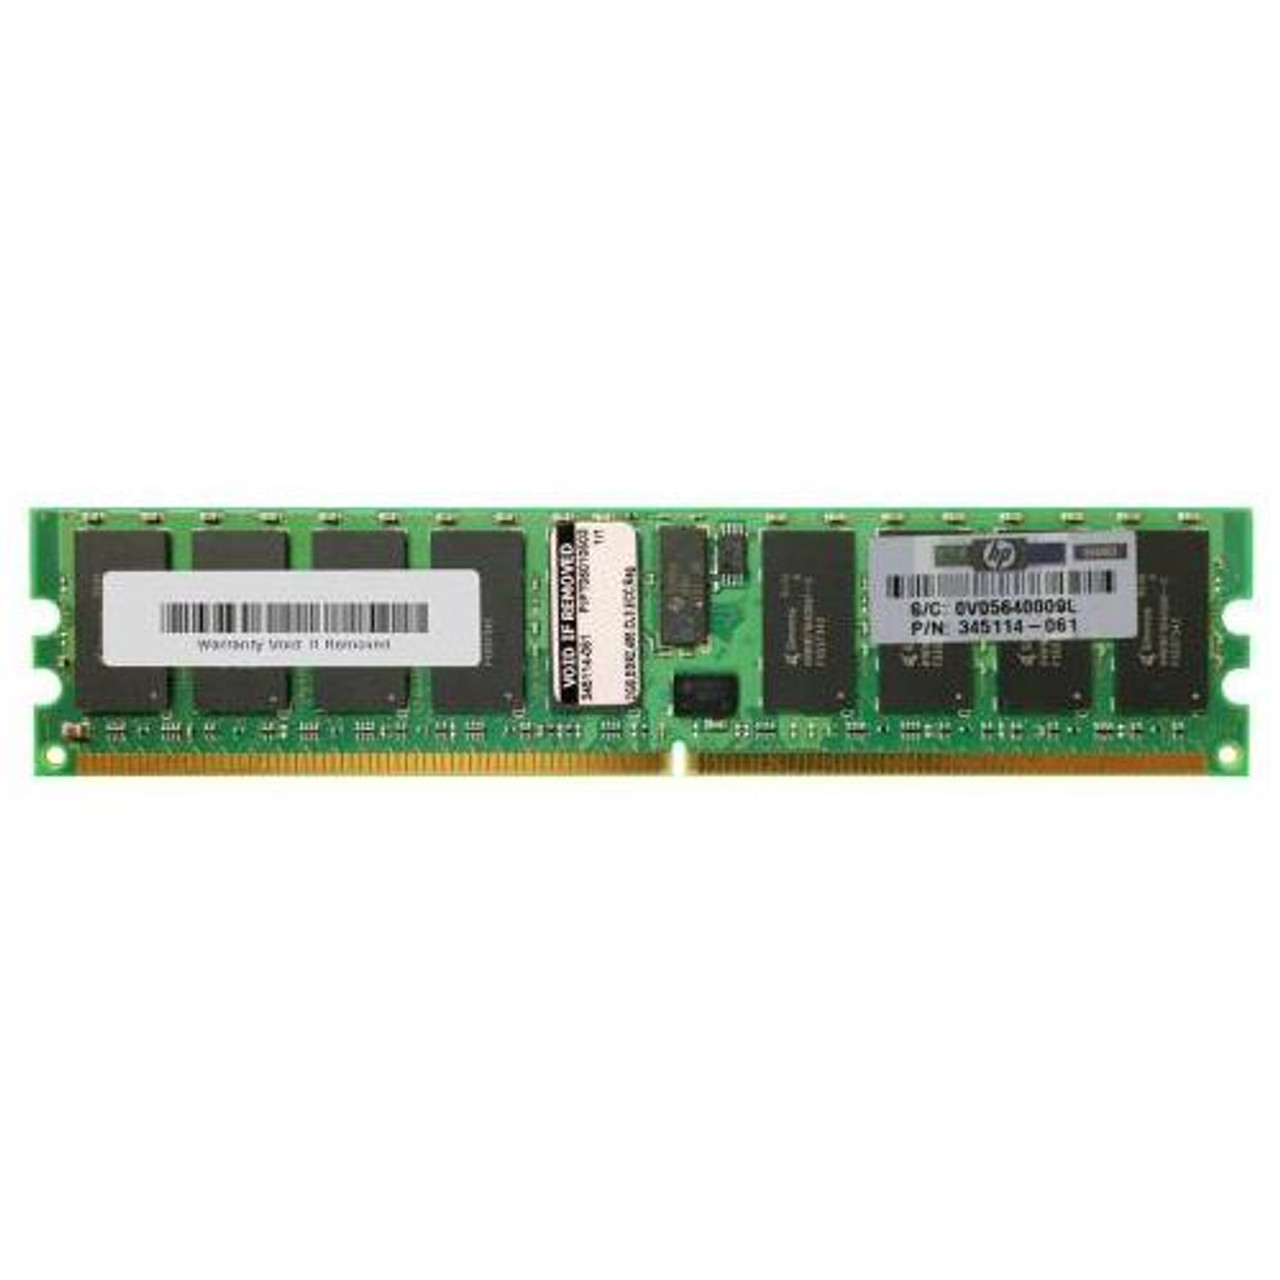 345114-061 HP 2GB DDR2 Registered ECC PC2-3200 400Mhz 2Rx4 Server